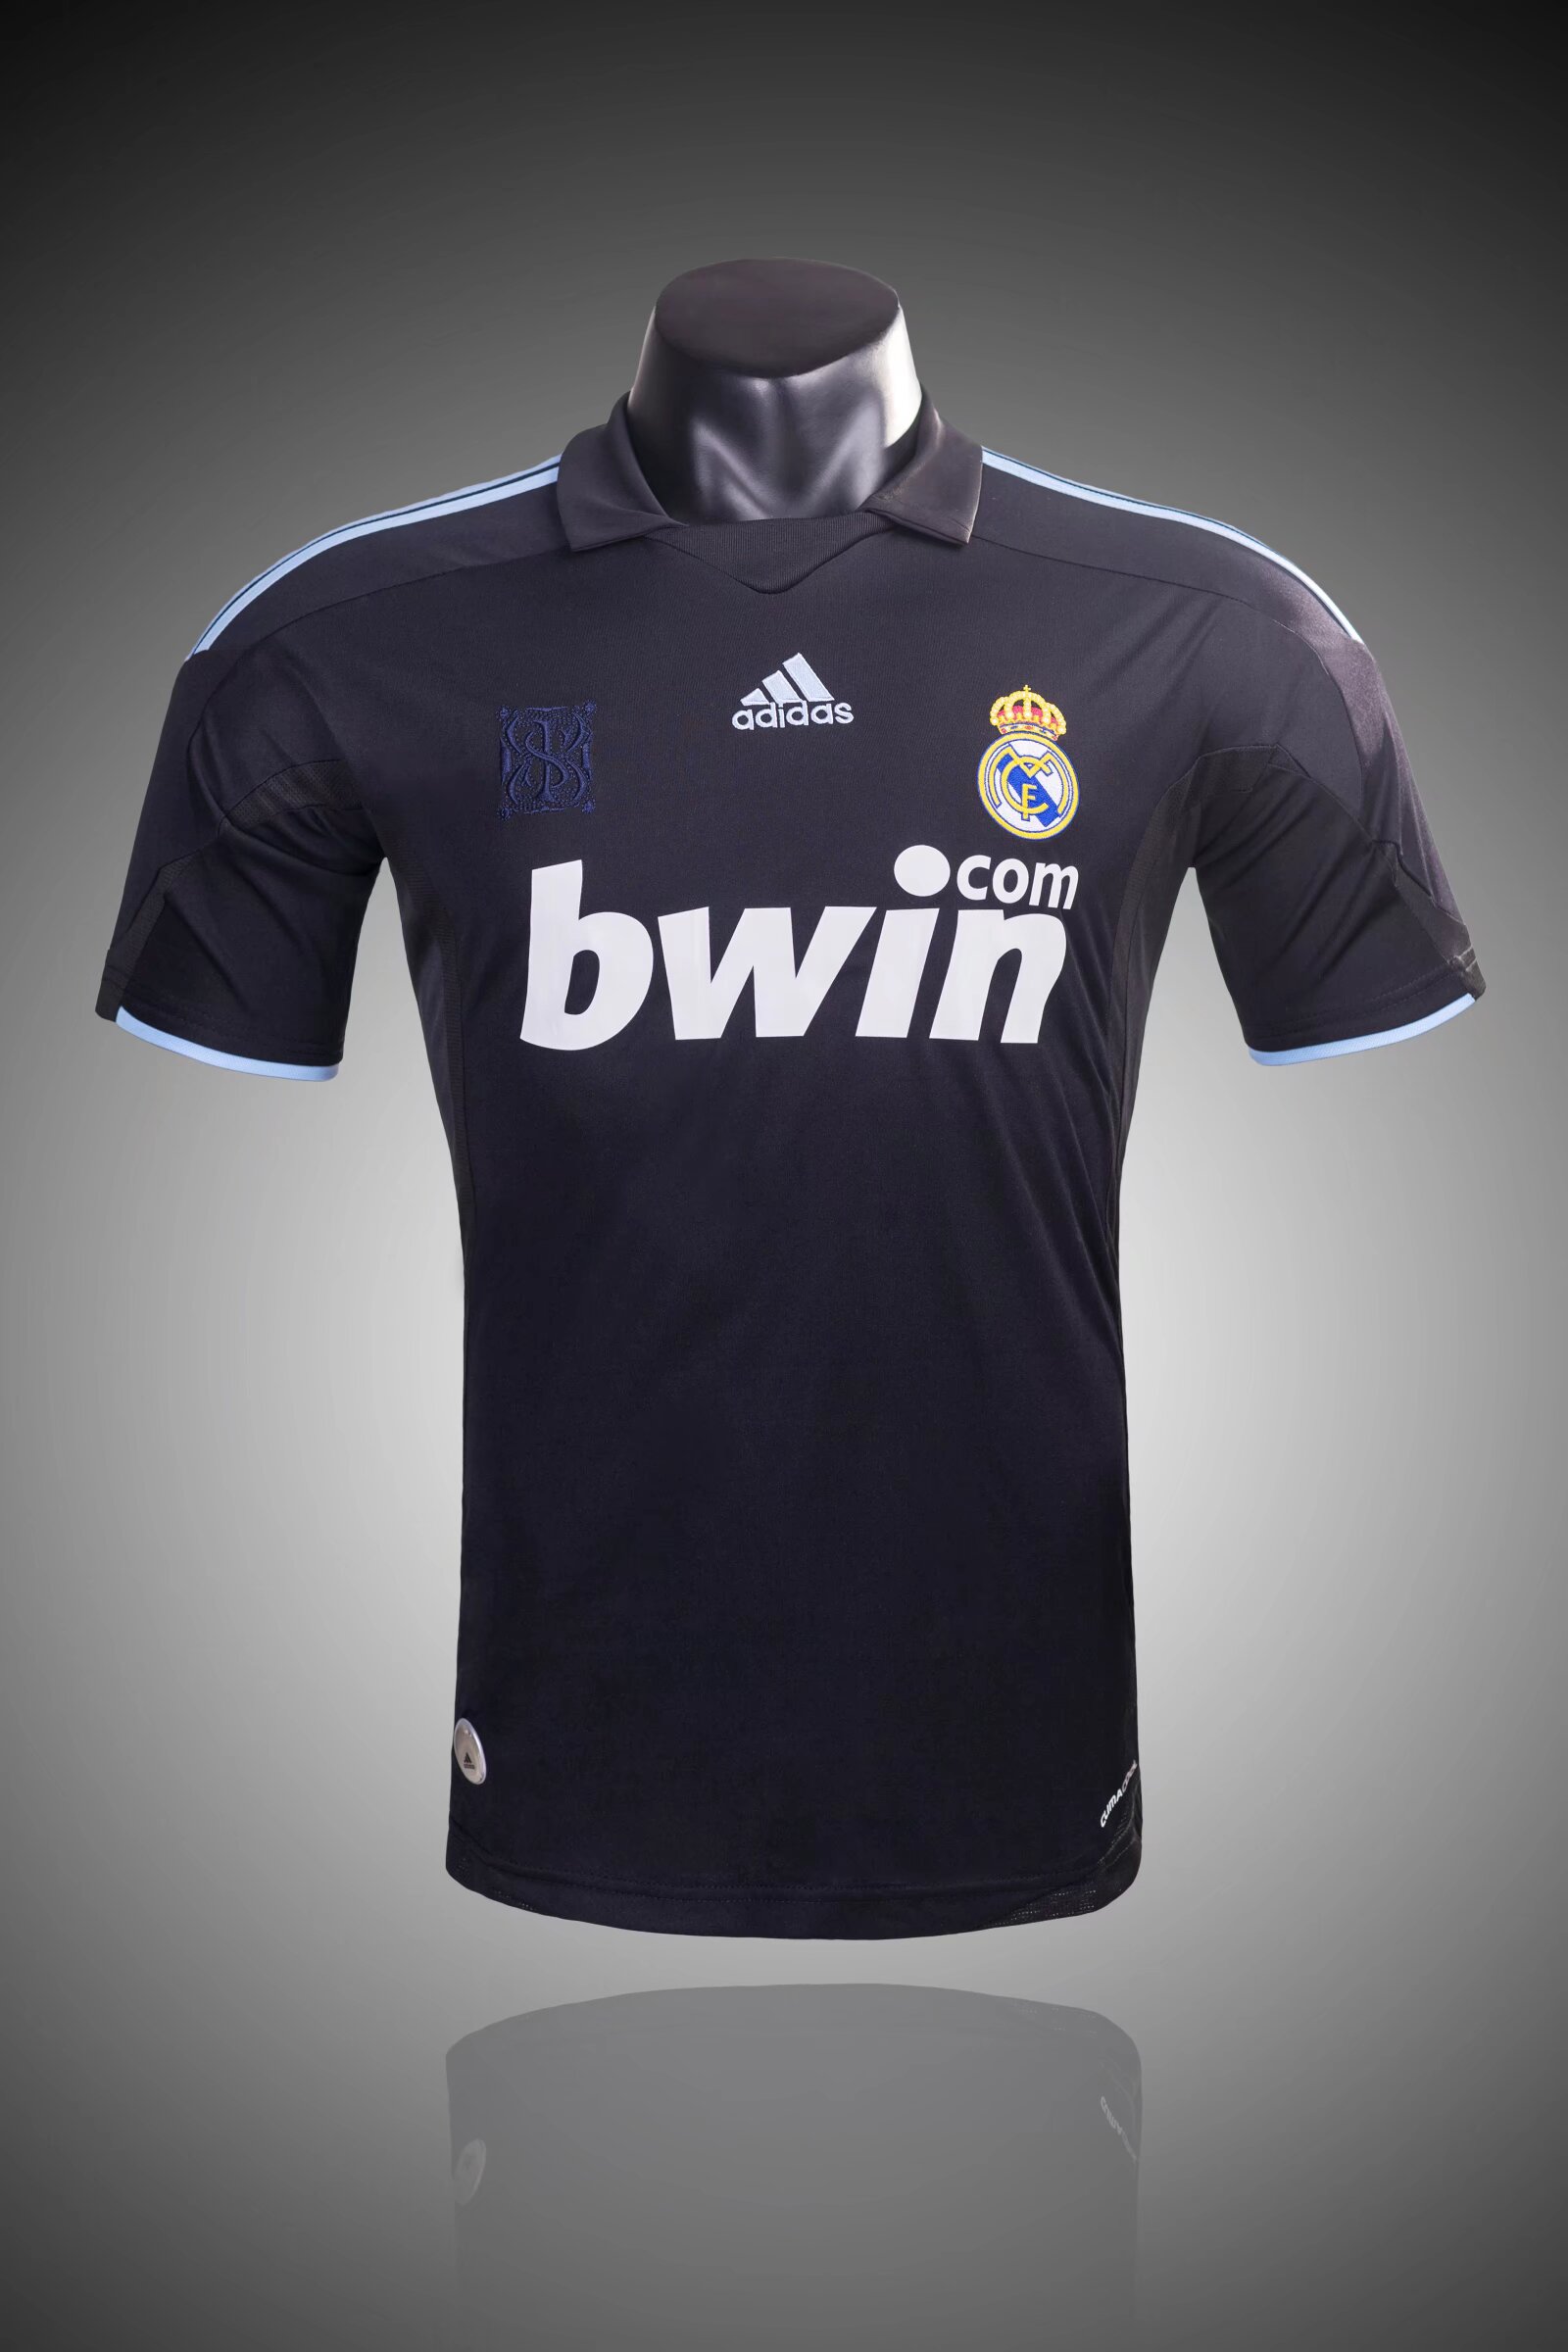 2009-2010 Real Madrid away retro